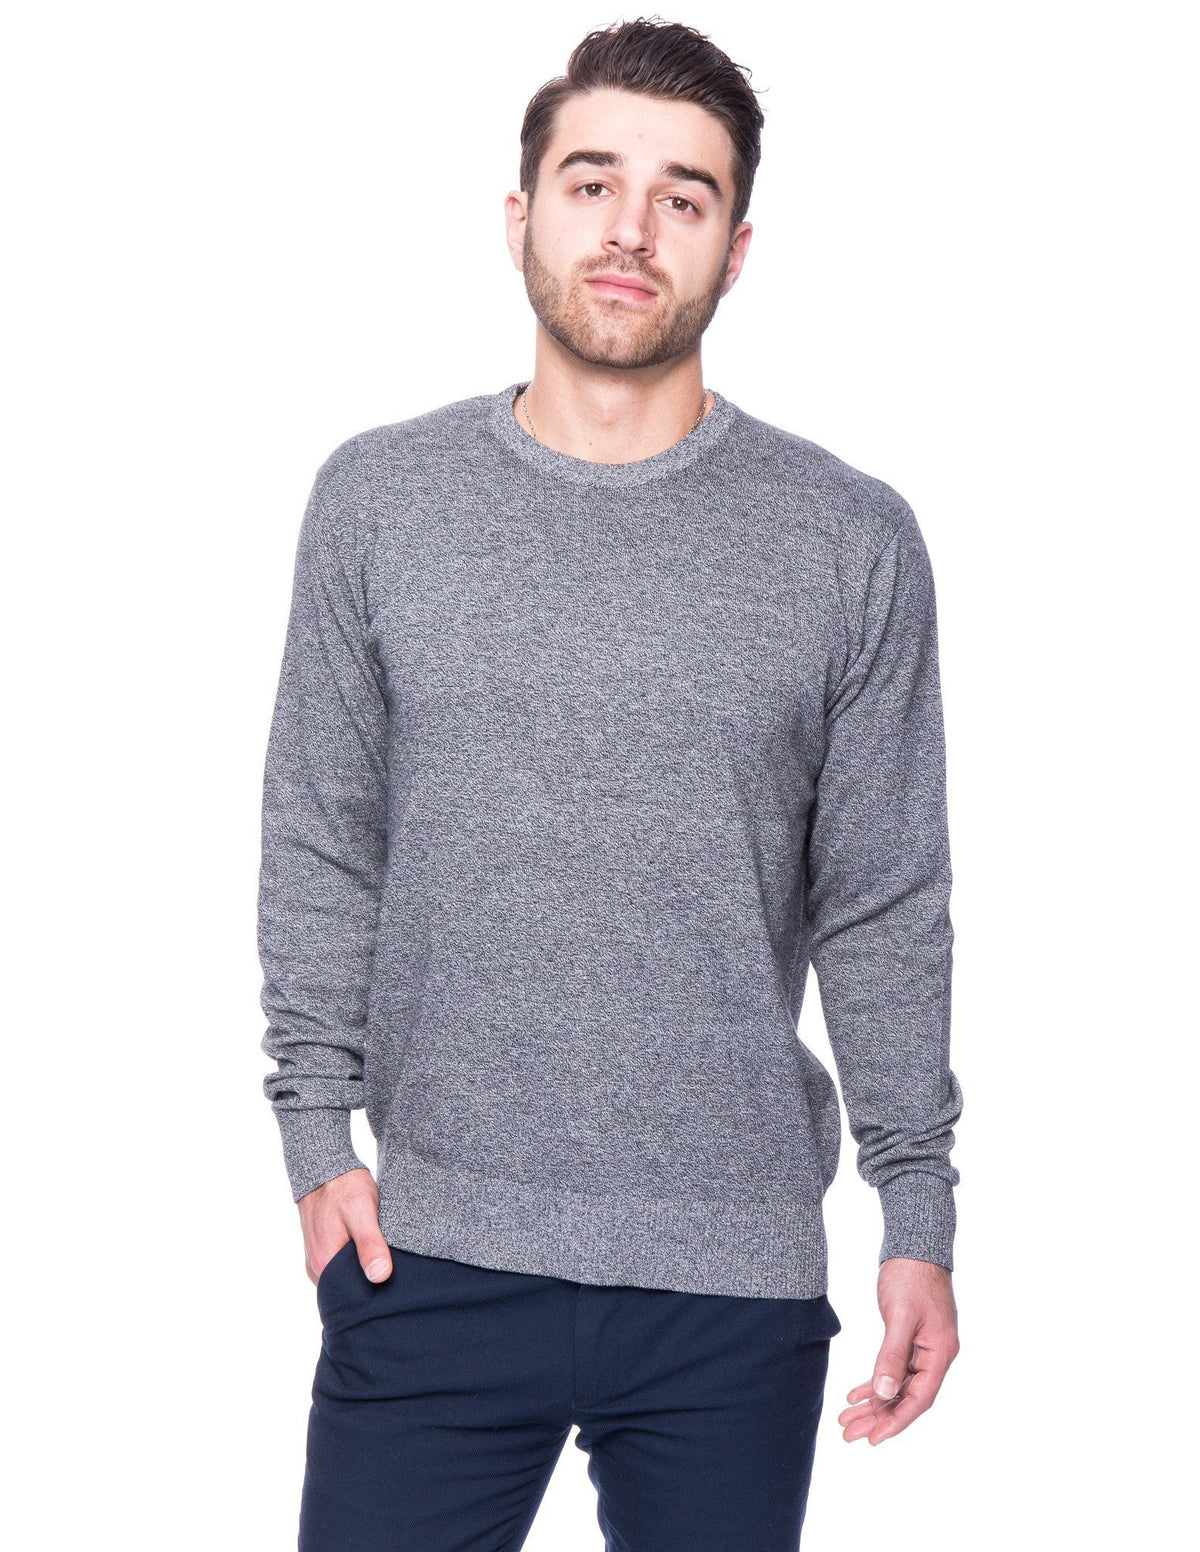 Men's 100% Cotton Crew Neck Sweater - Marl Black/White